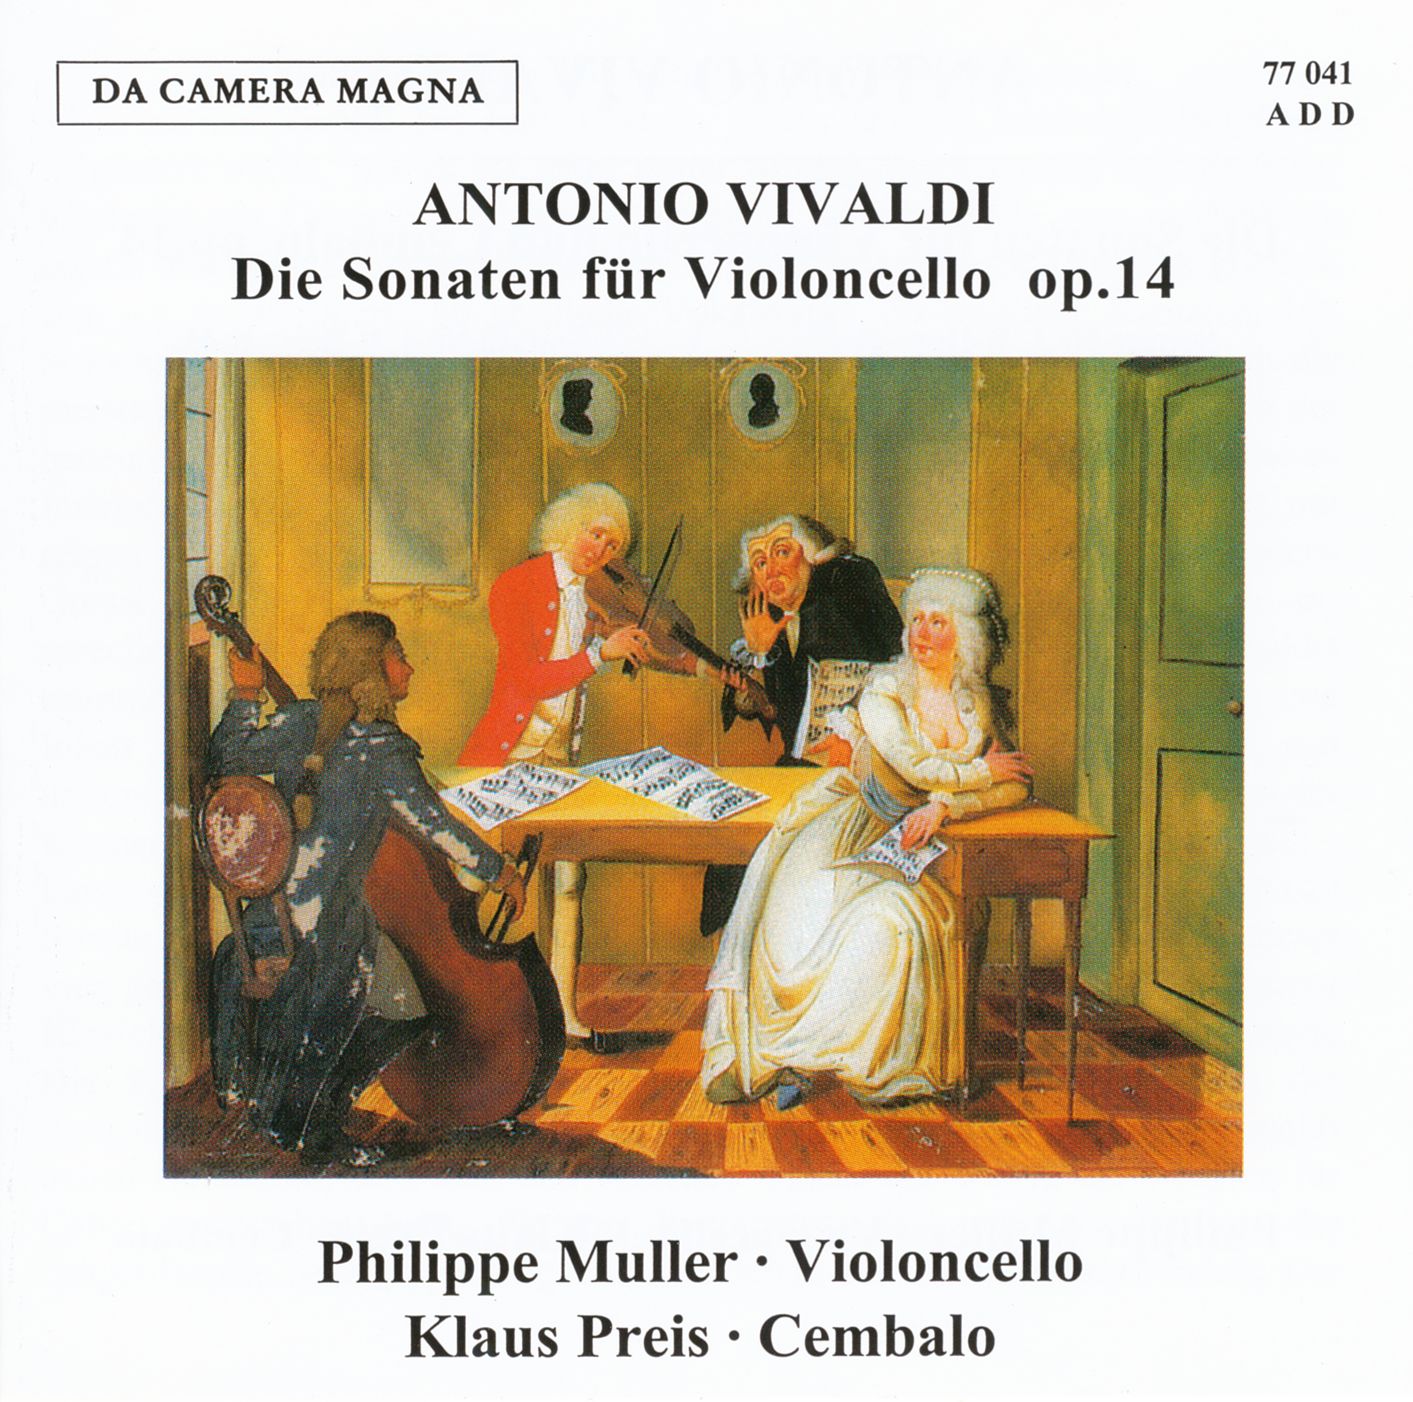 Antonio Vivaldi - Die Sonaten für Violoncello und Cembalo op.14